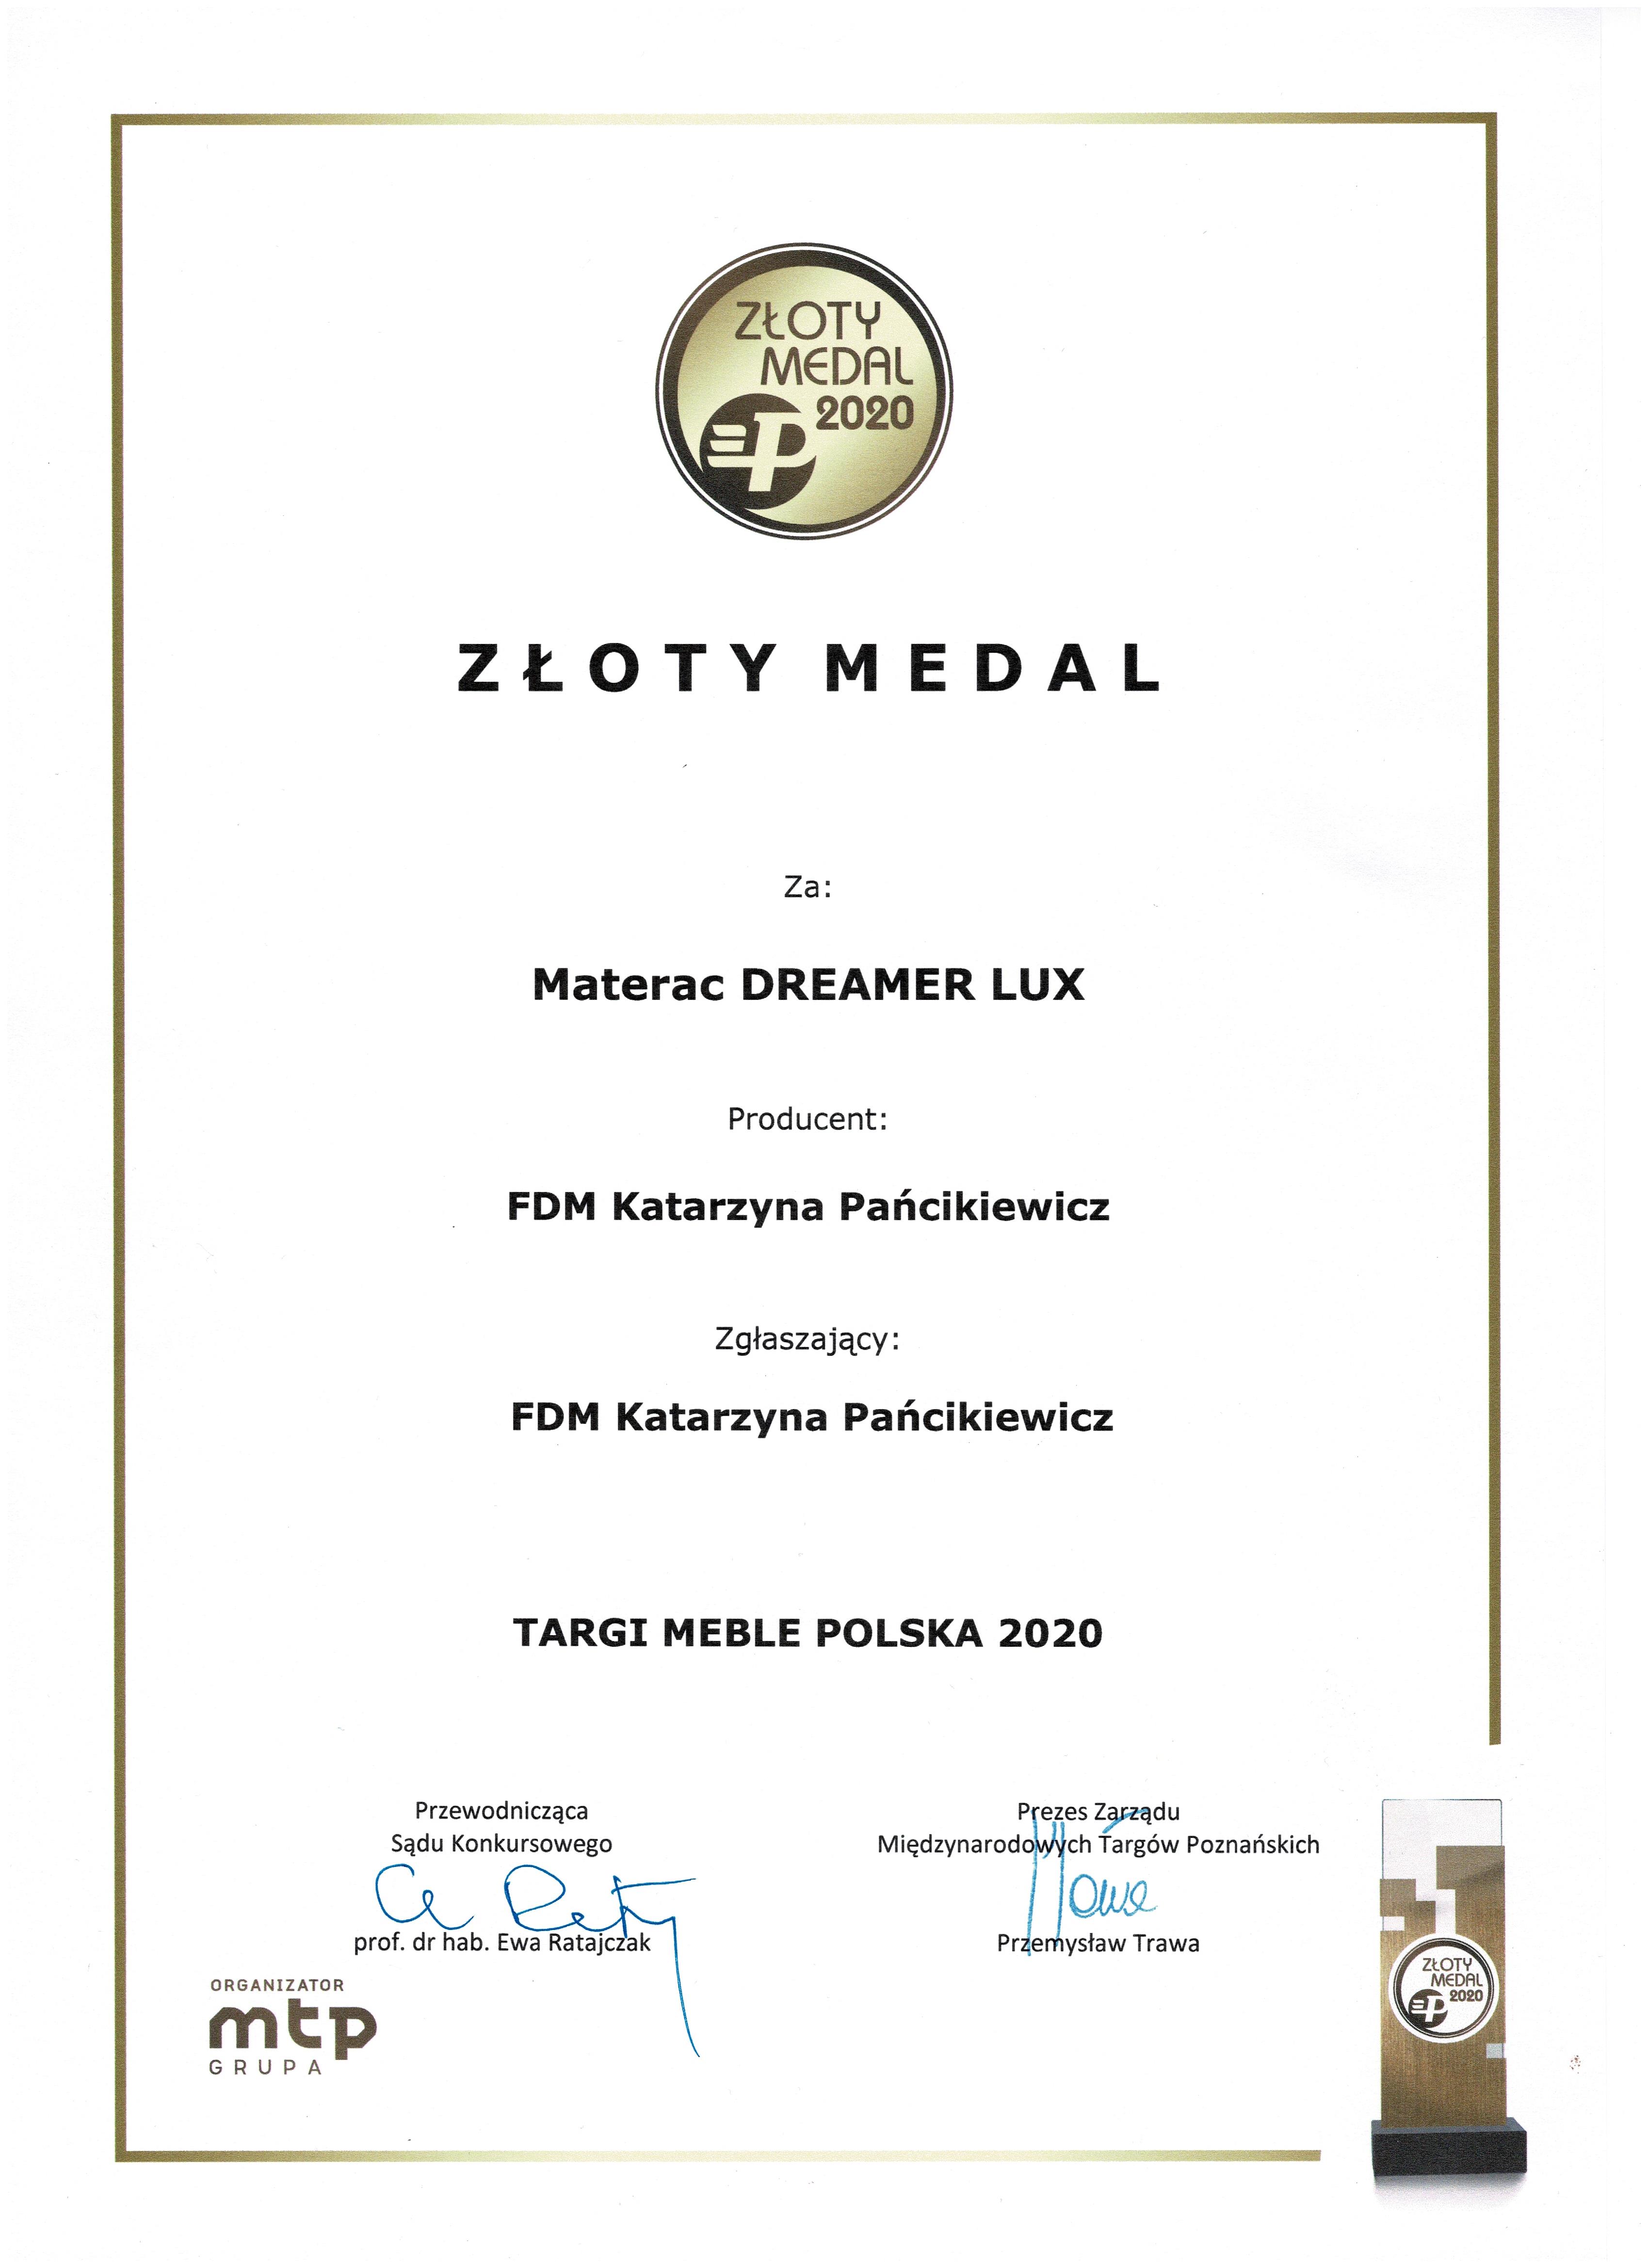 Dyplom Złoty Medal Meble Polska MTP 2020 dla FDM